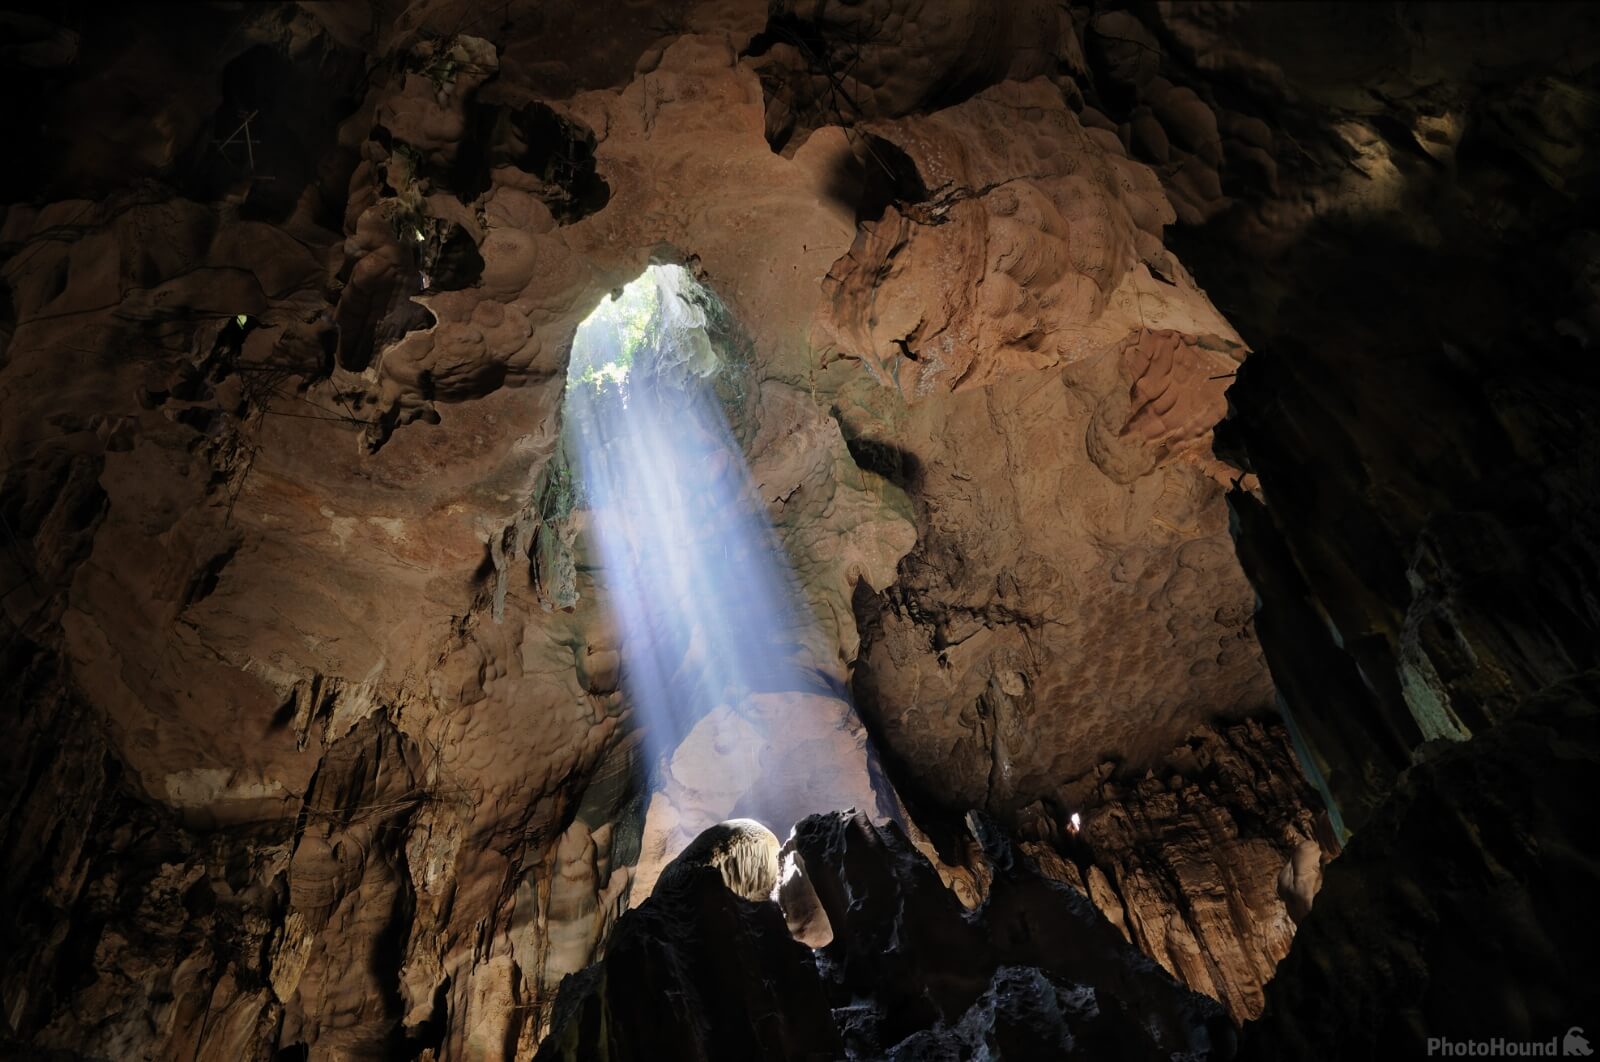 Image of Niah Caves National Park by Luka Esenko